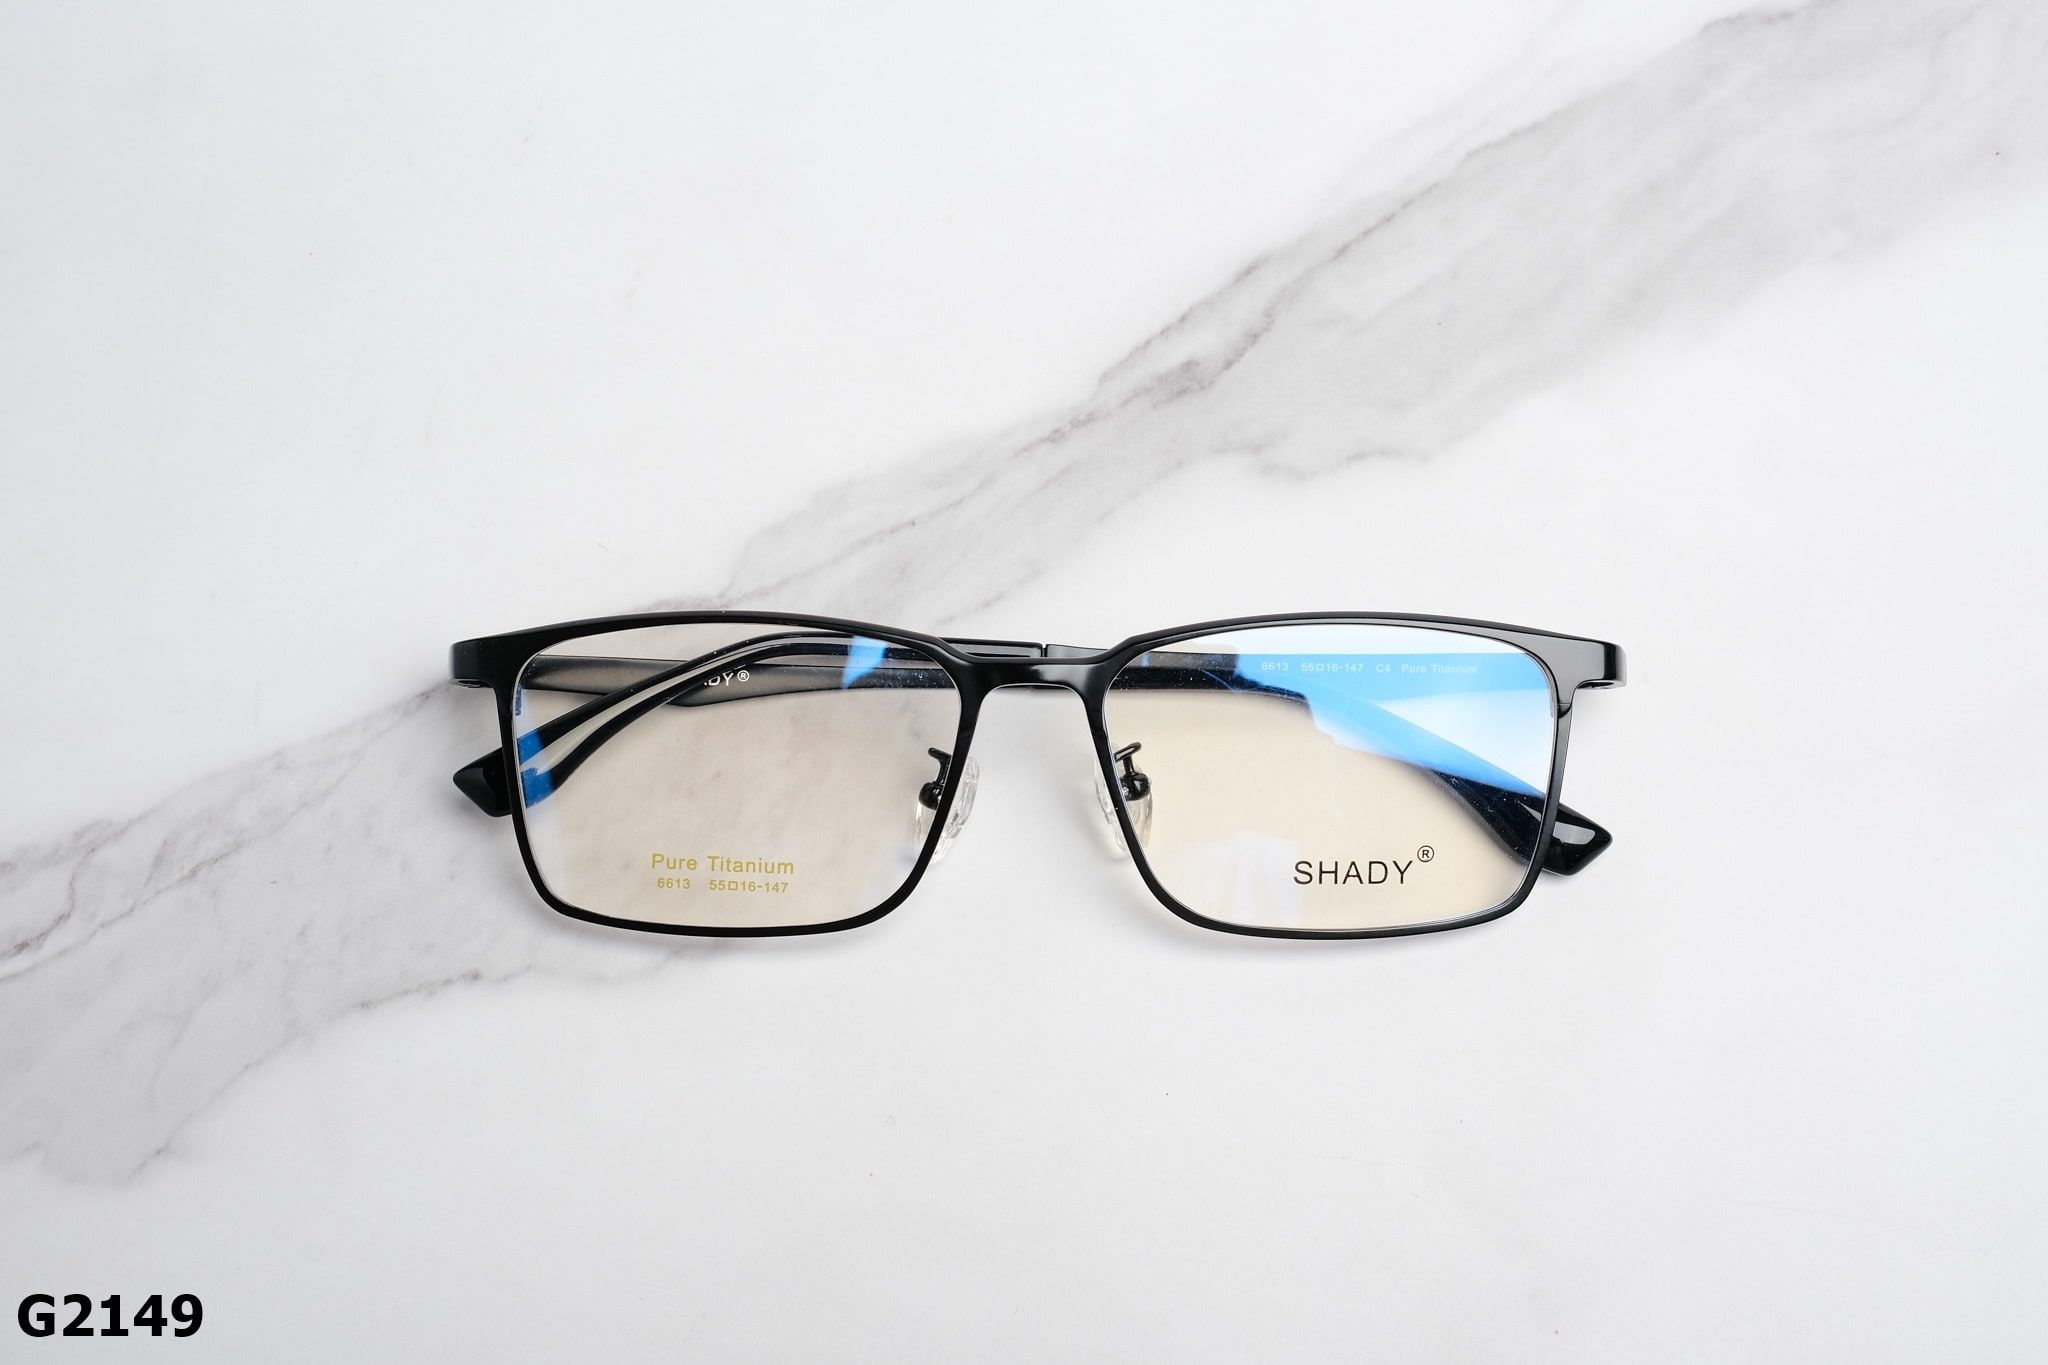  SHADY Eyewear - Glasses - G2149 